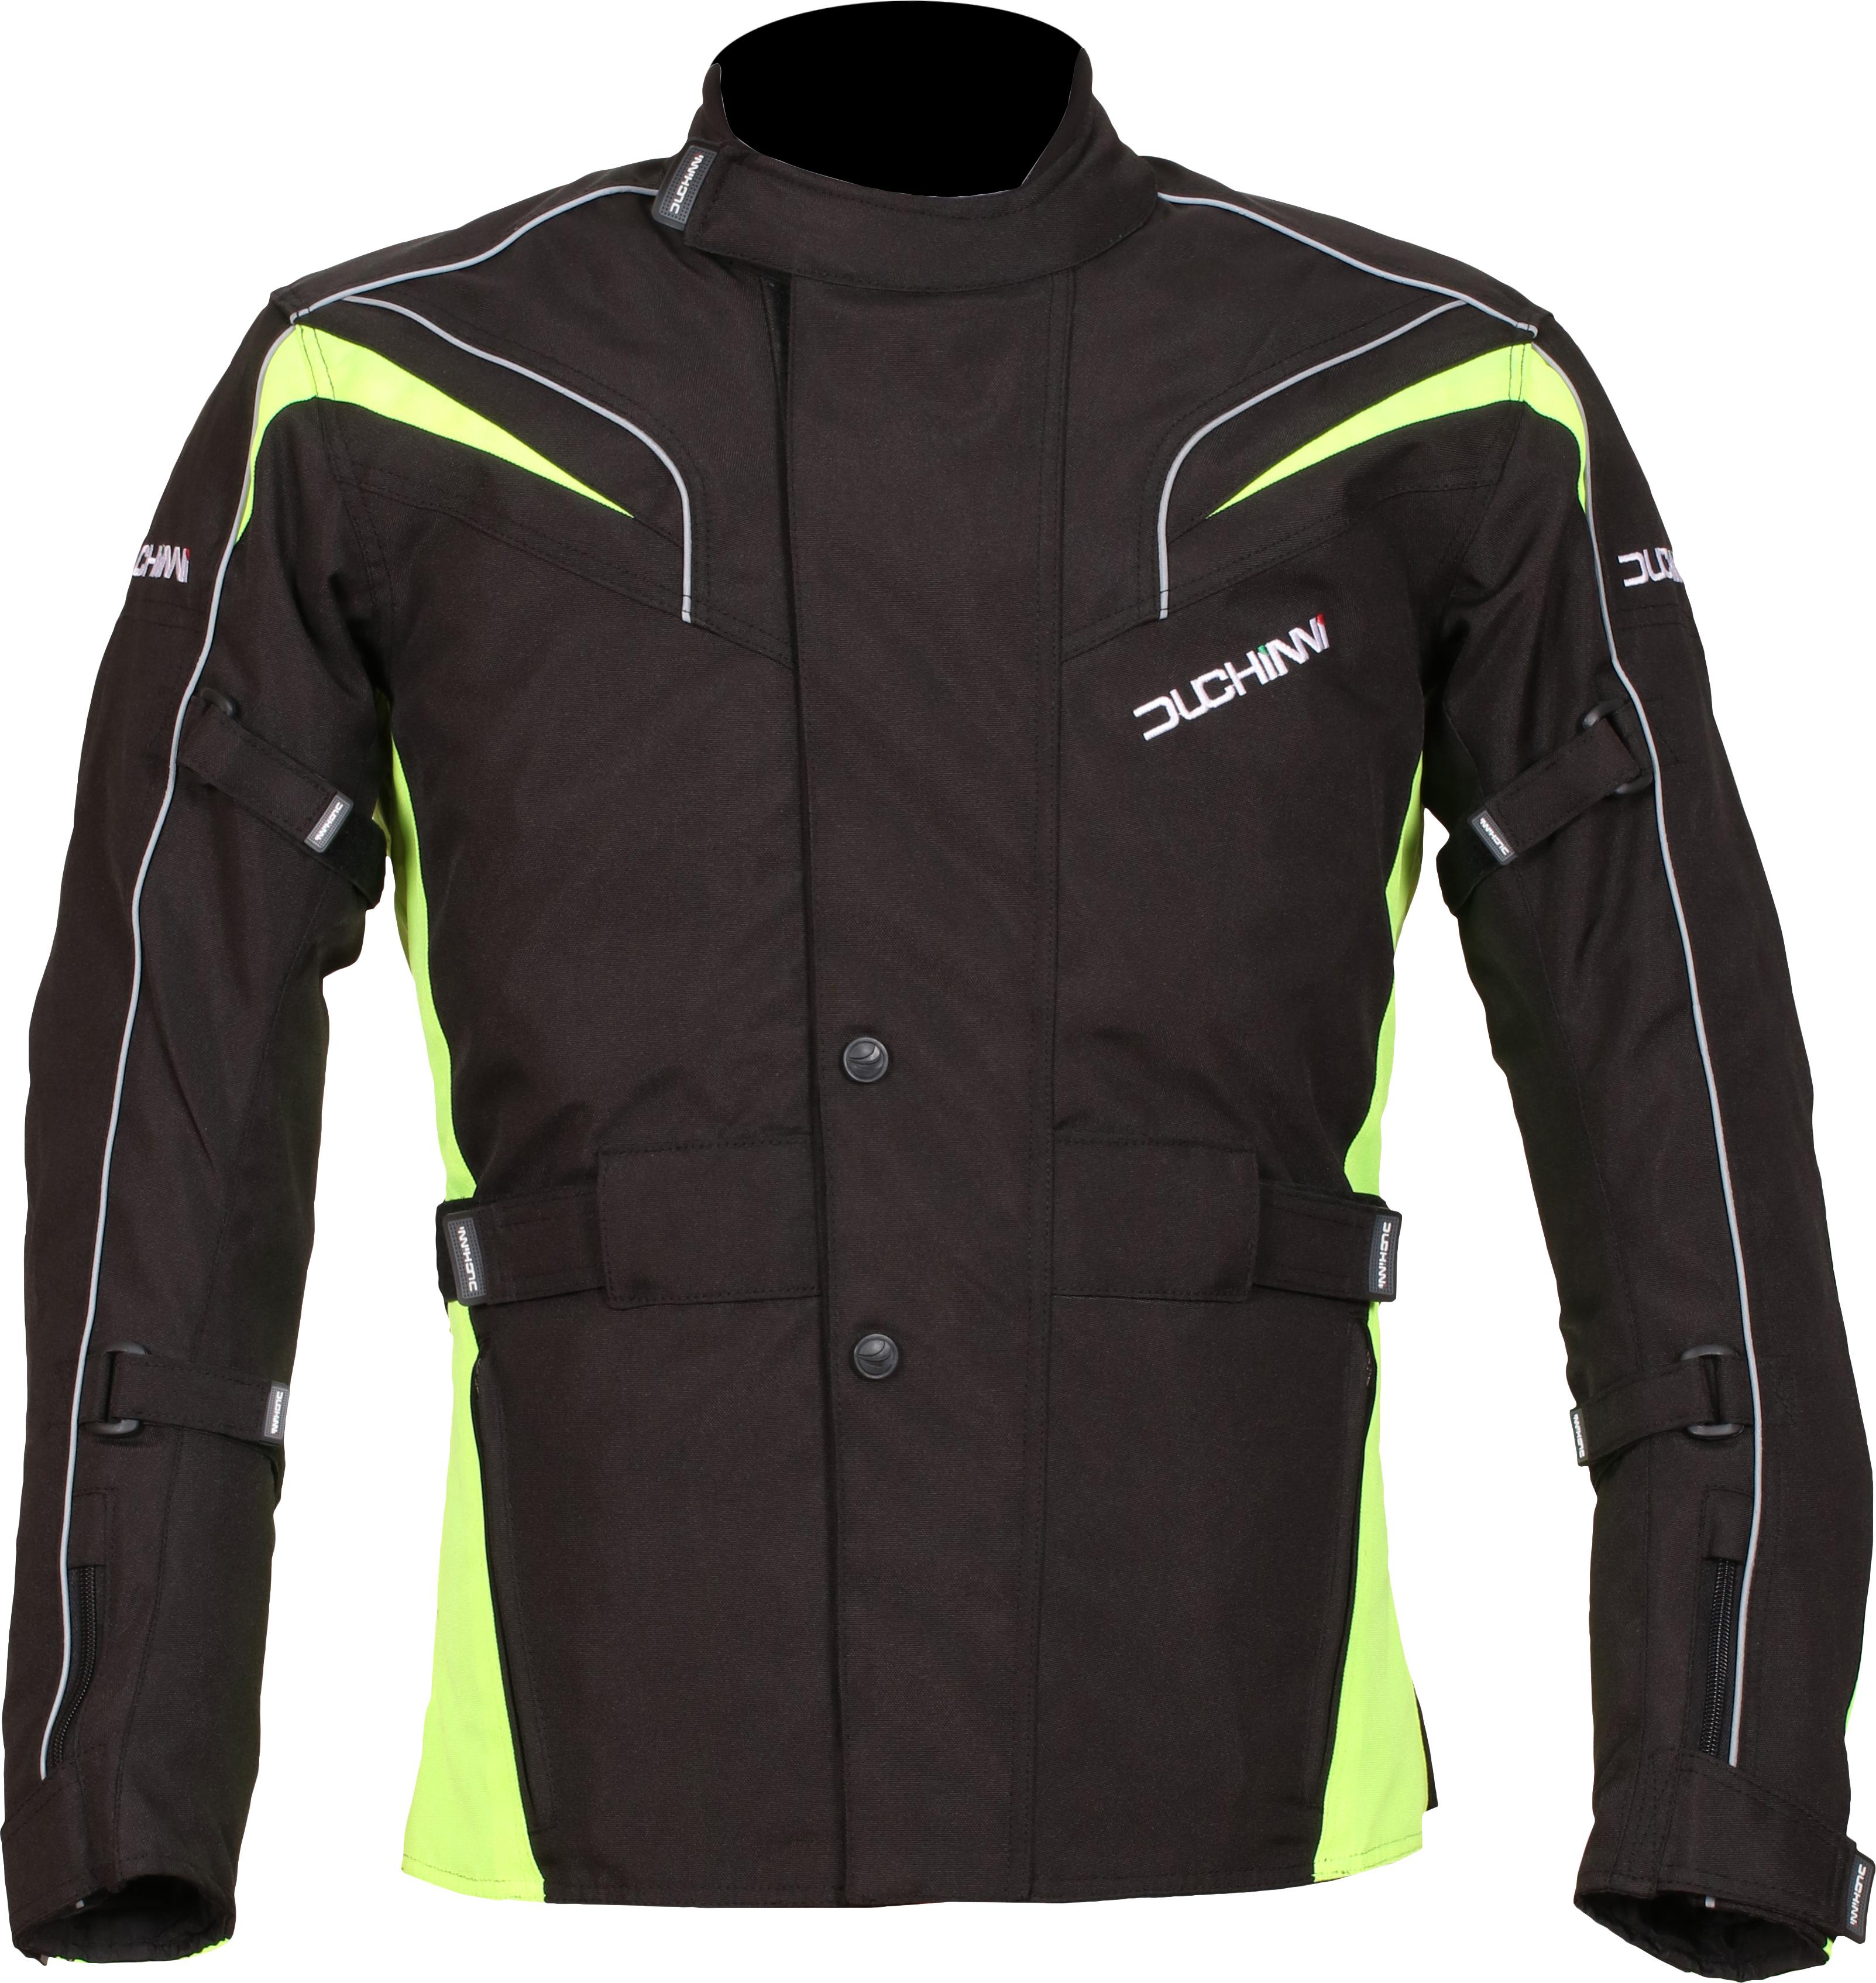 Duchinni Hurricane Motorcycle Jacket - Black And Neon, 5Xl